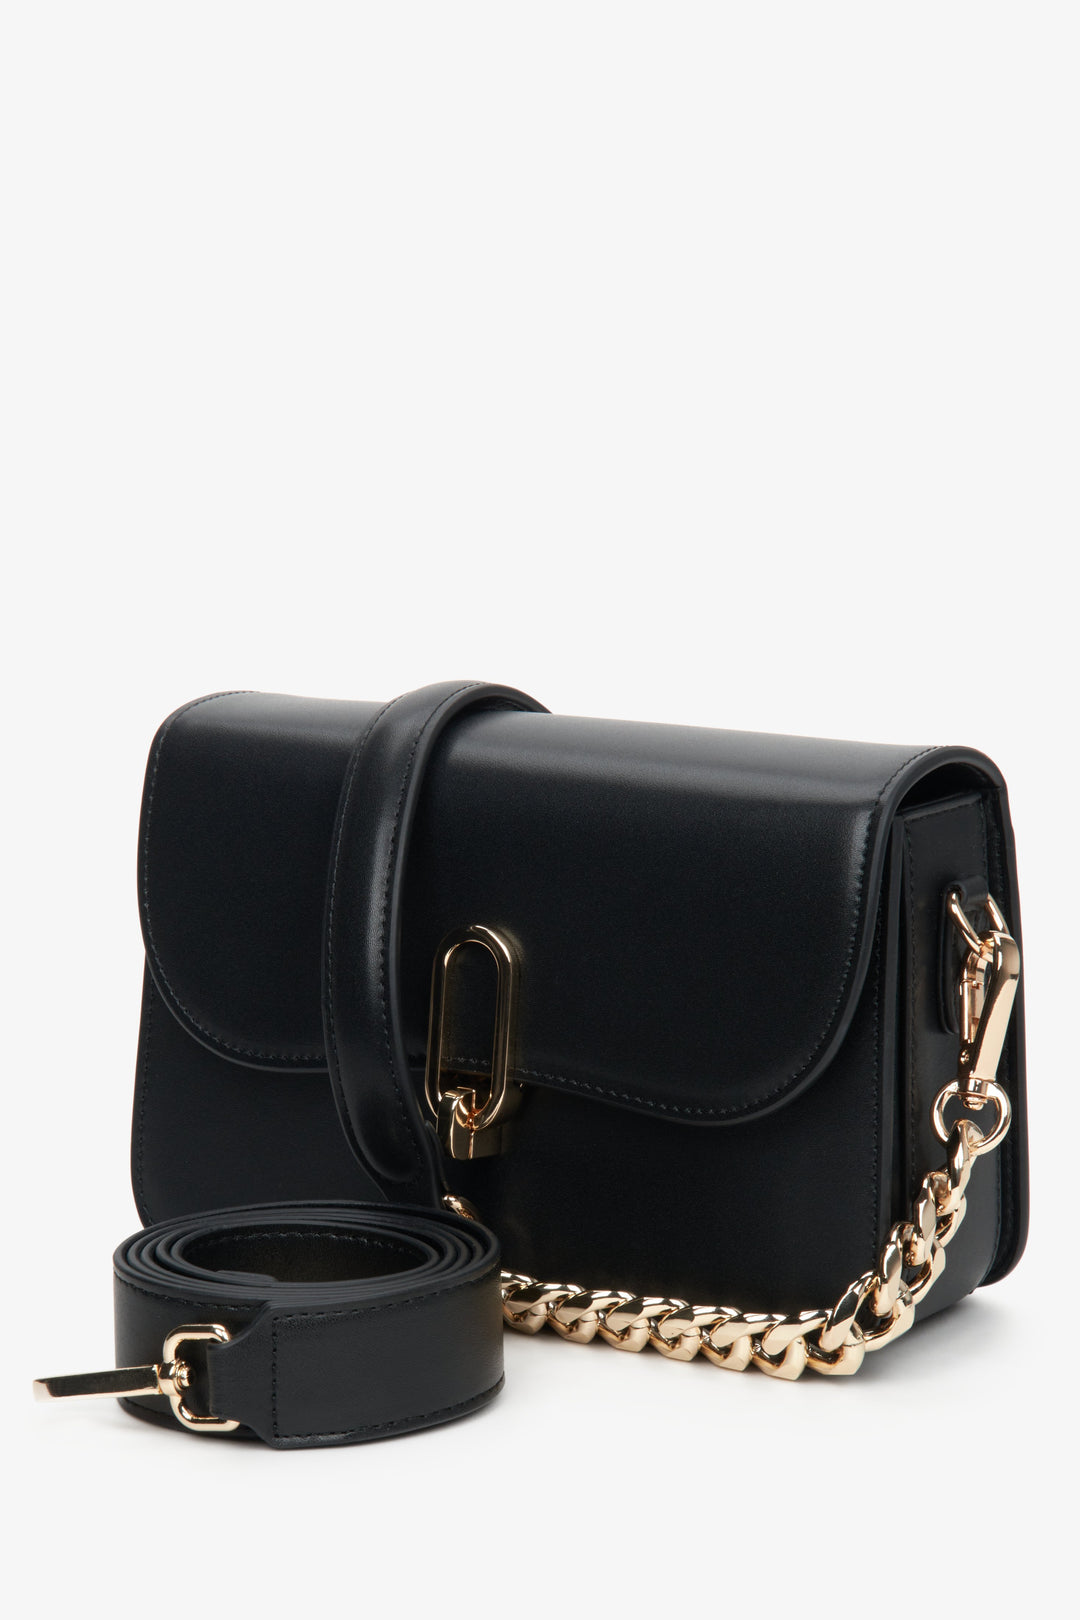 Women's leather black handbag Estro with golden fittings - presentation of the entire set.